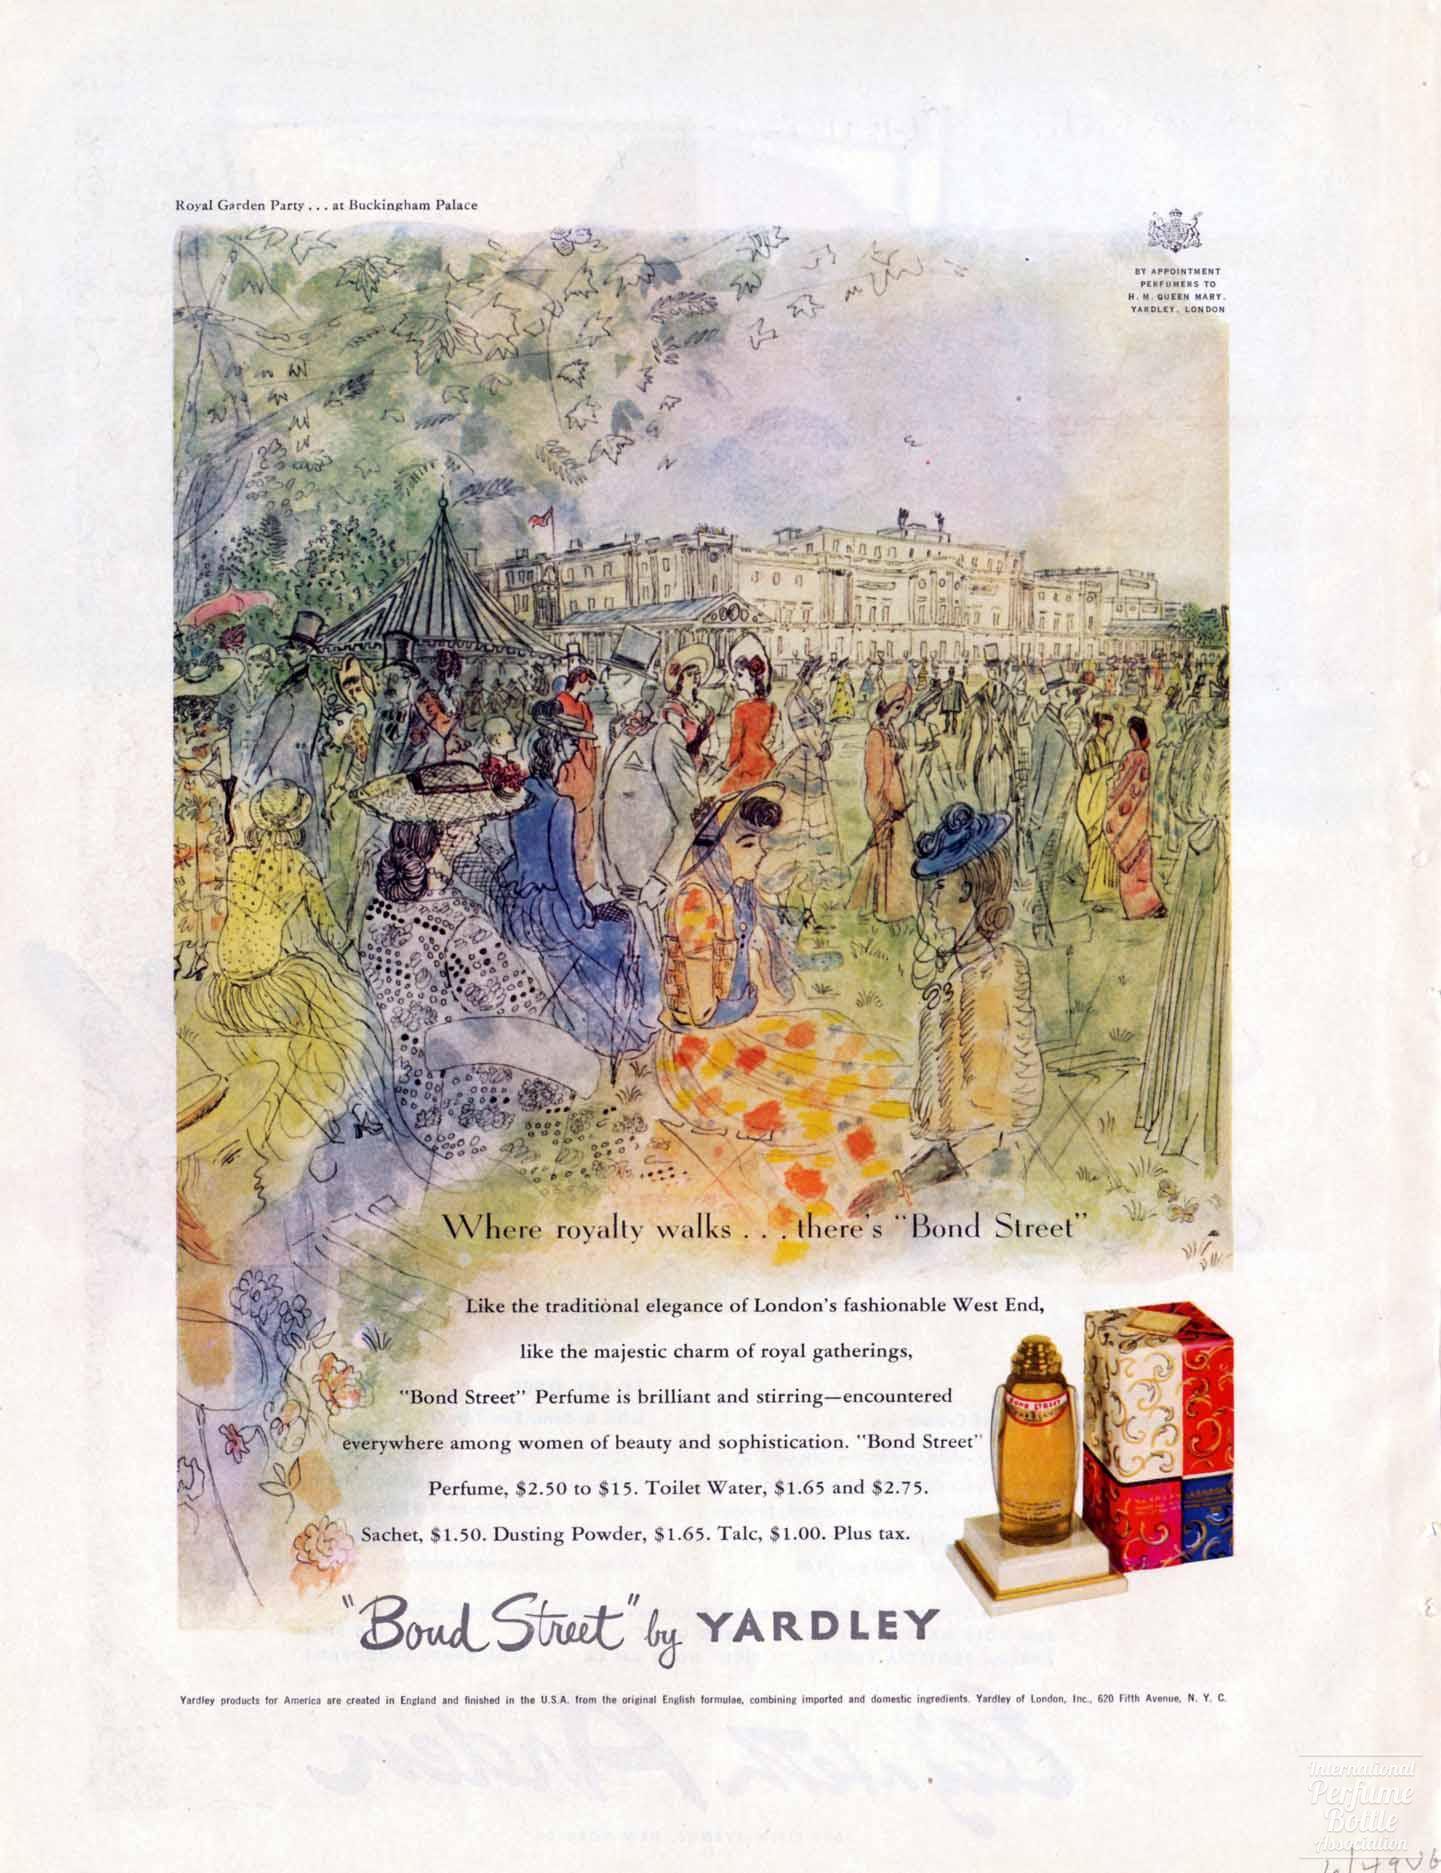 "Bond Street" by Yardley Buckingham Palace Advertisement - 1949